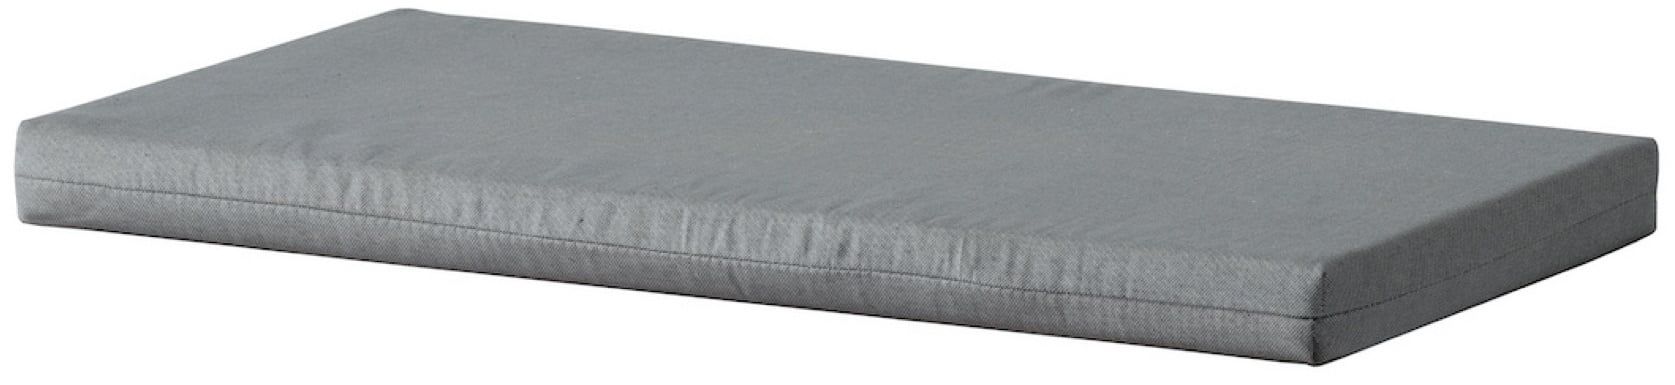 Seat cushion for Ringerike wardrobe, color: grey - Dimensions: 7 x 60 x 32 cm (H x W x D)